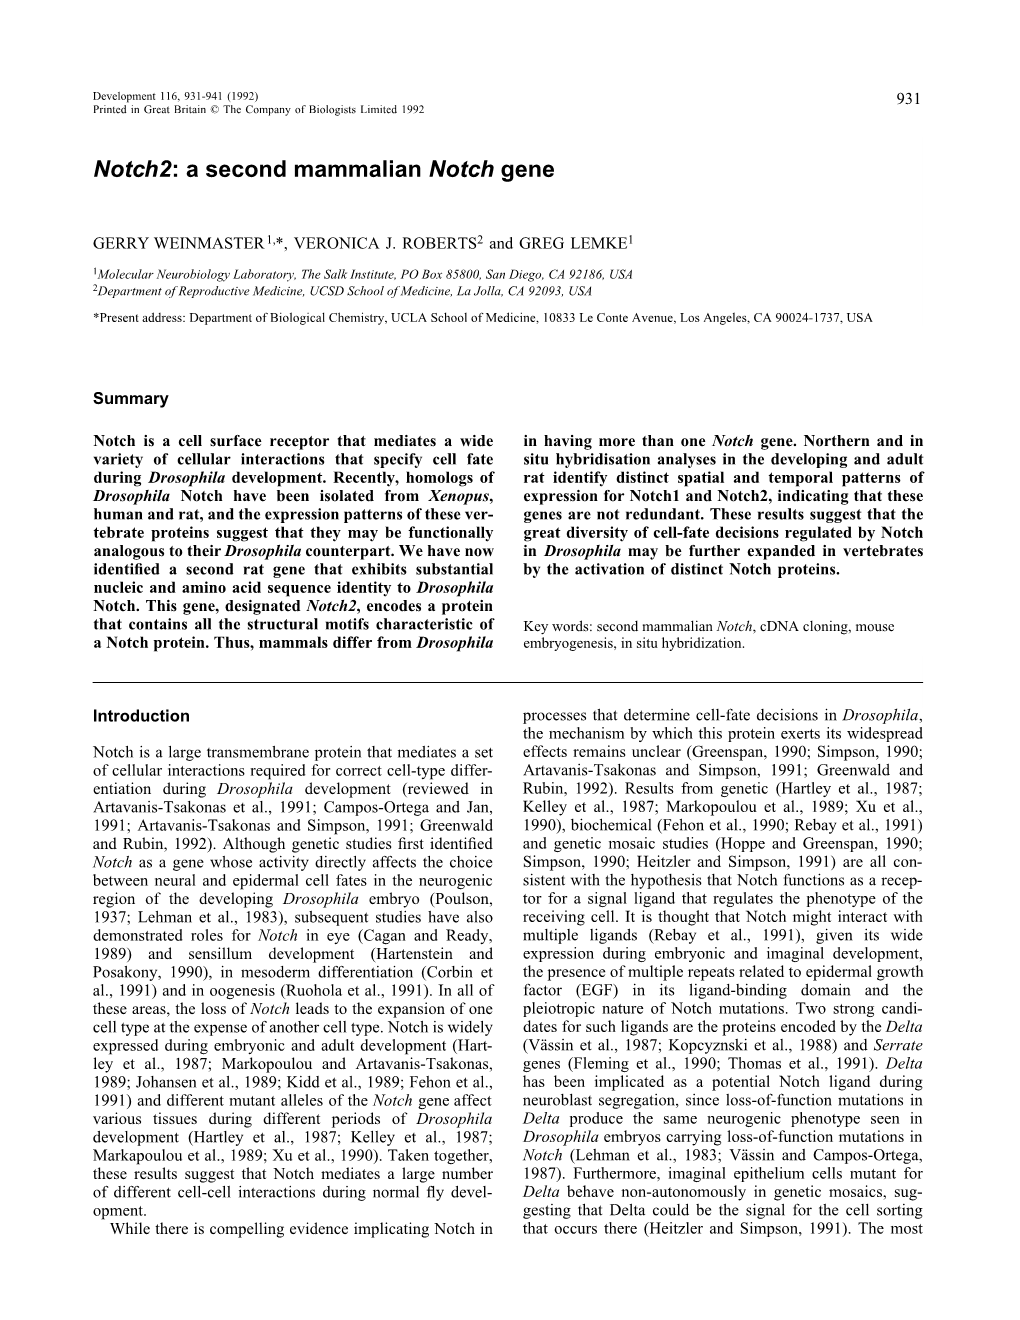 Notch2: a Second Mammalian Notch Gene